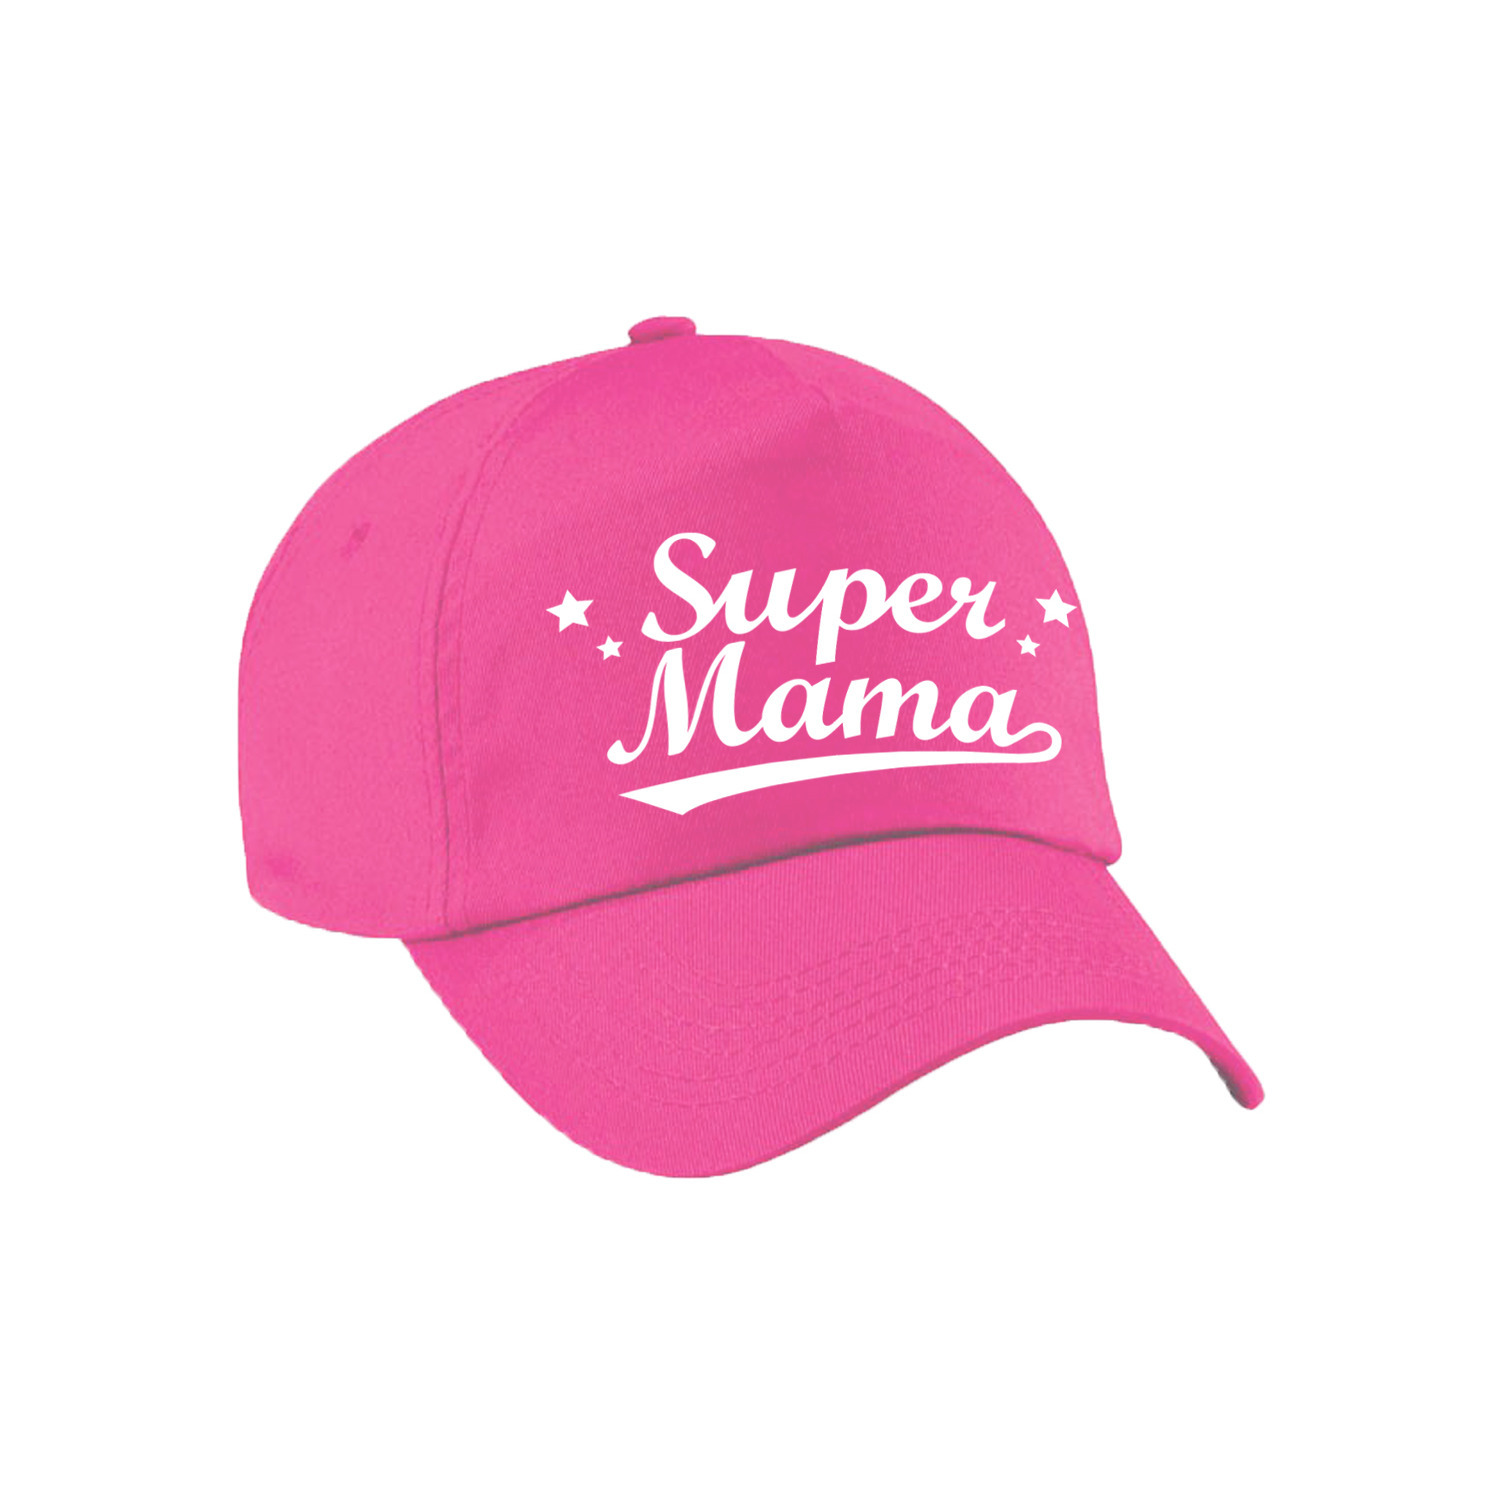 Super mama moederdag cadeau pet /cap roze voor dames